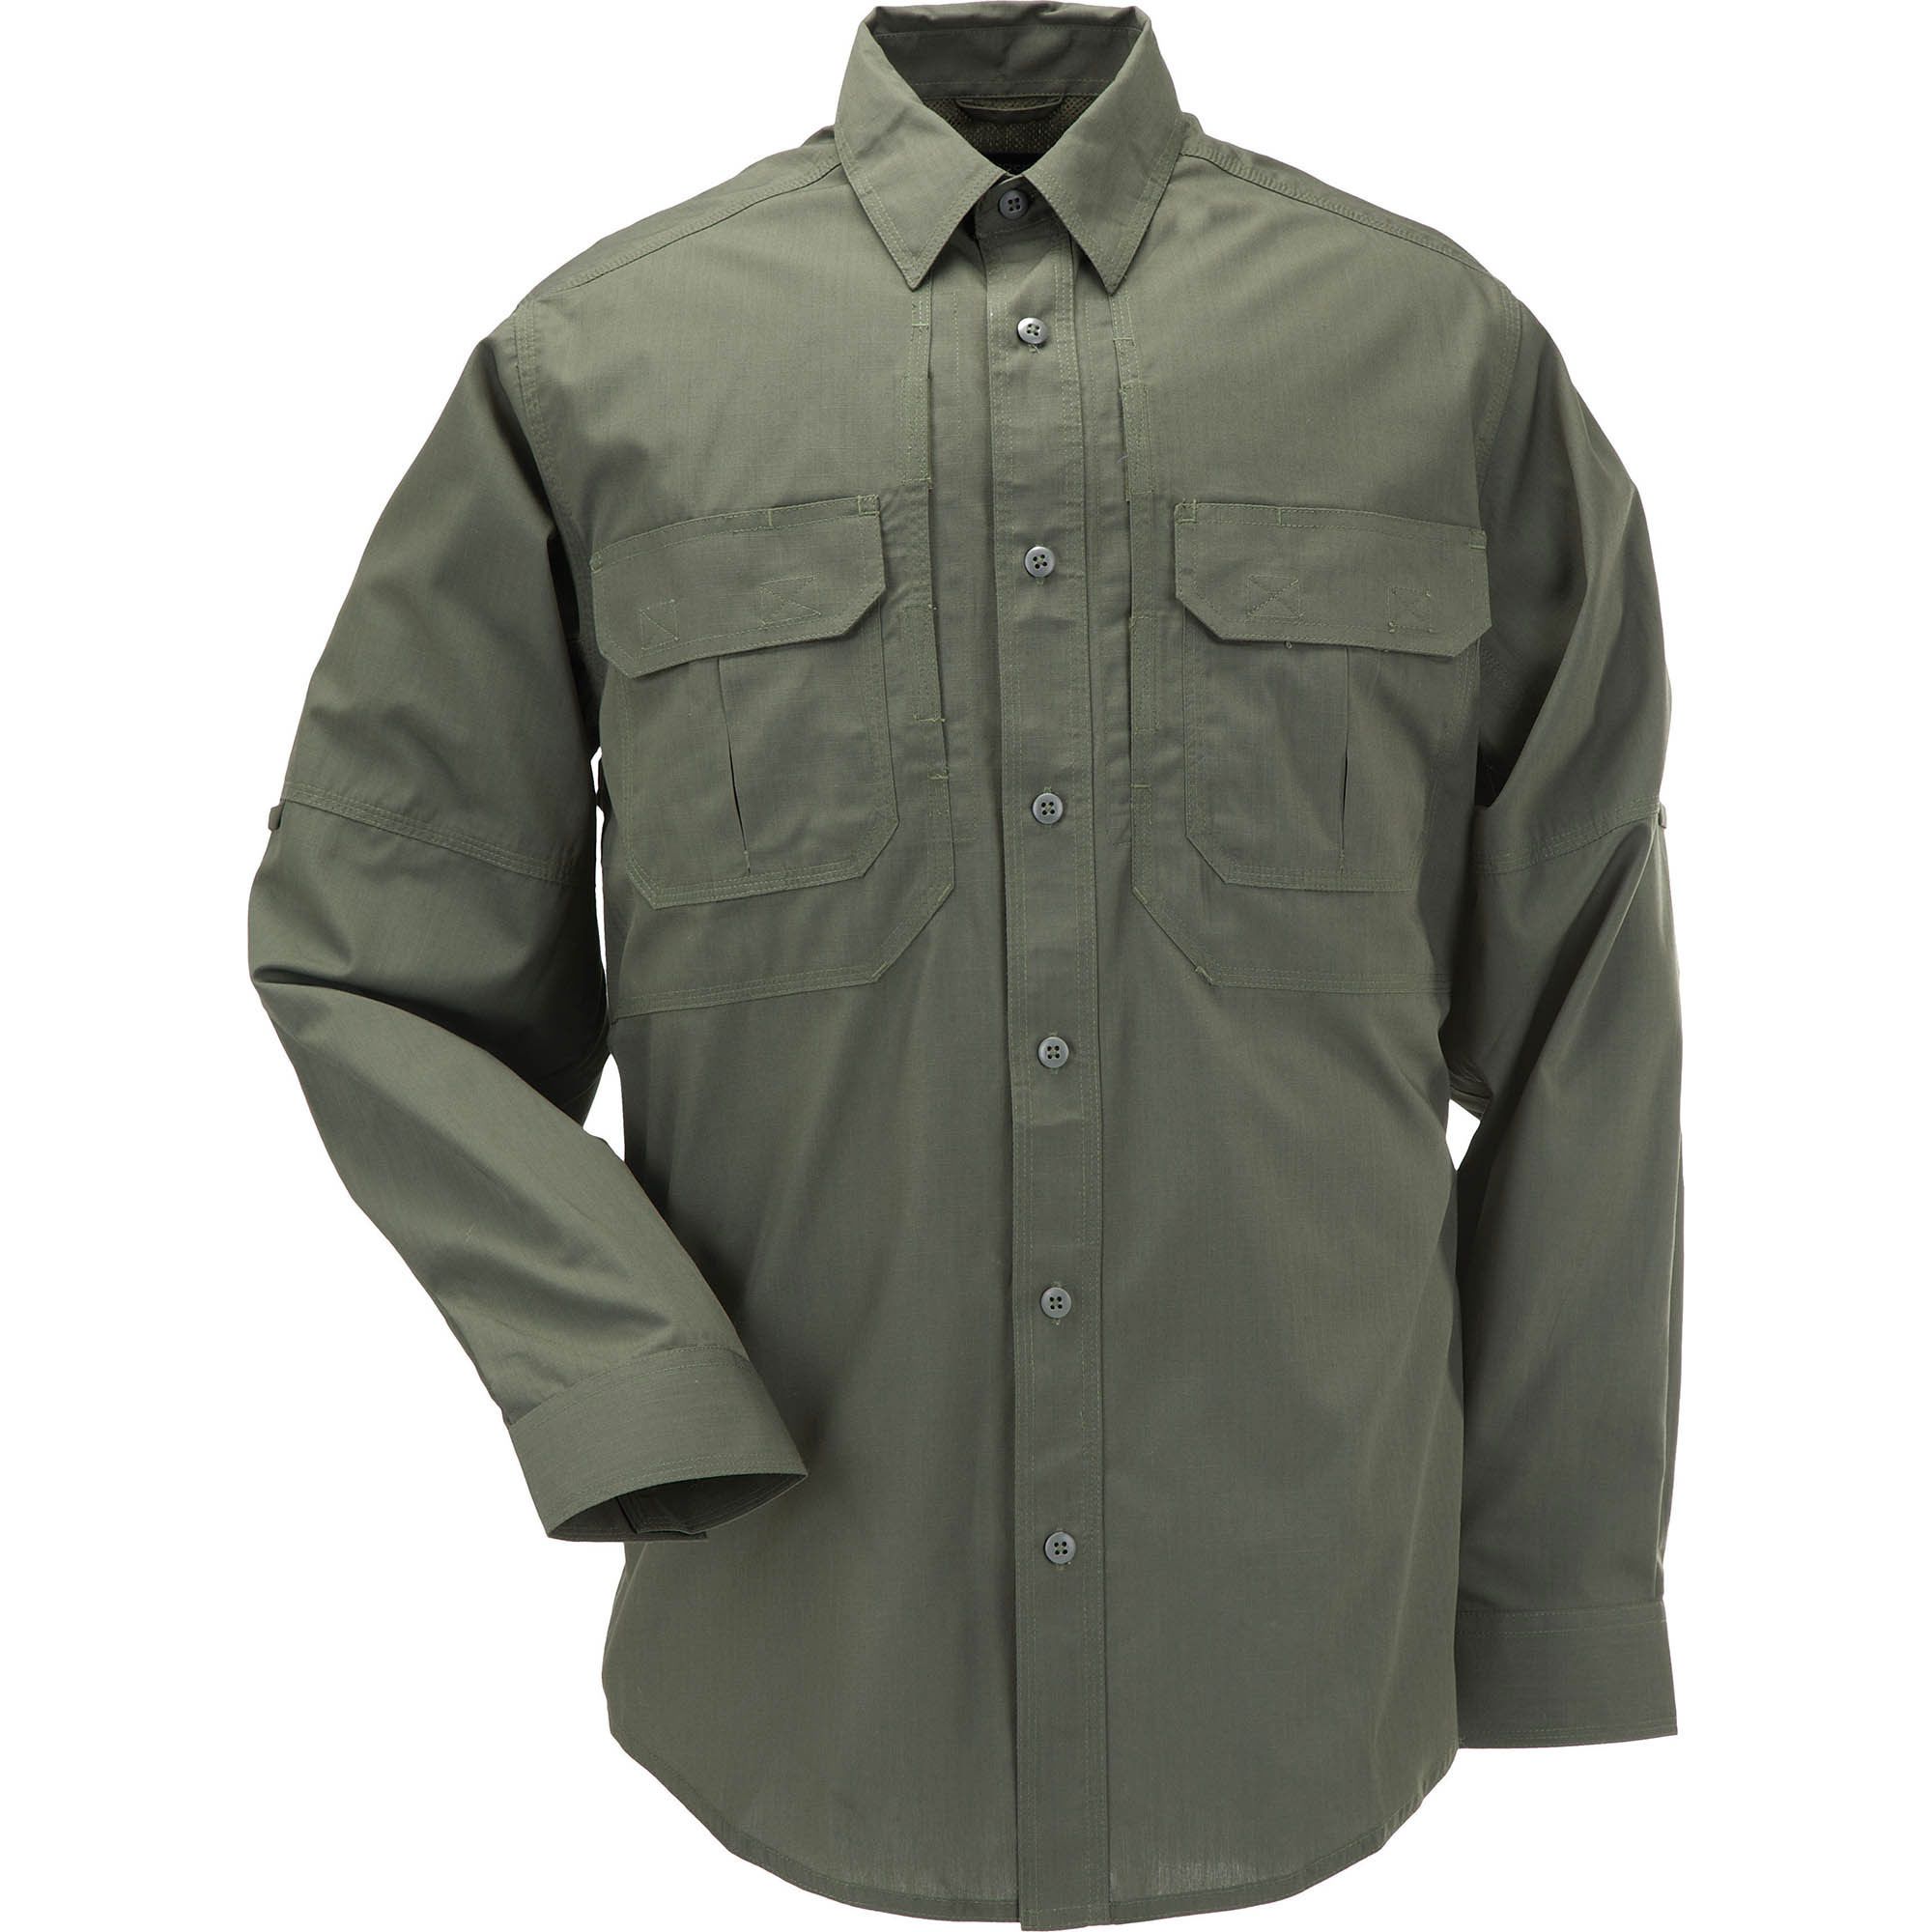 5.11 Tactical TacLite Professional Long Sleeve Shirt 72175 5.11 Tactical ktmart 1